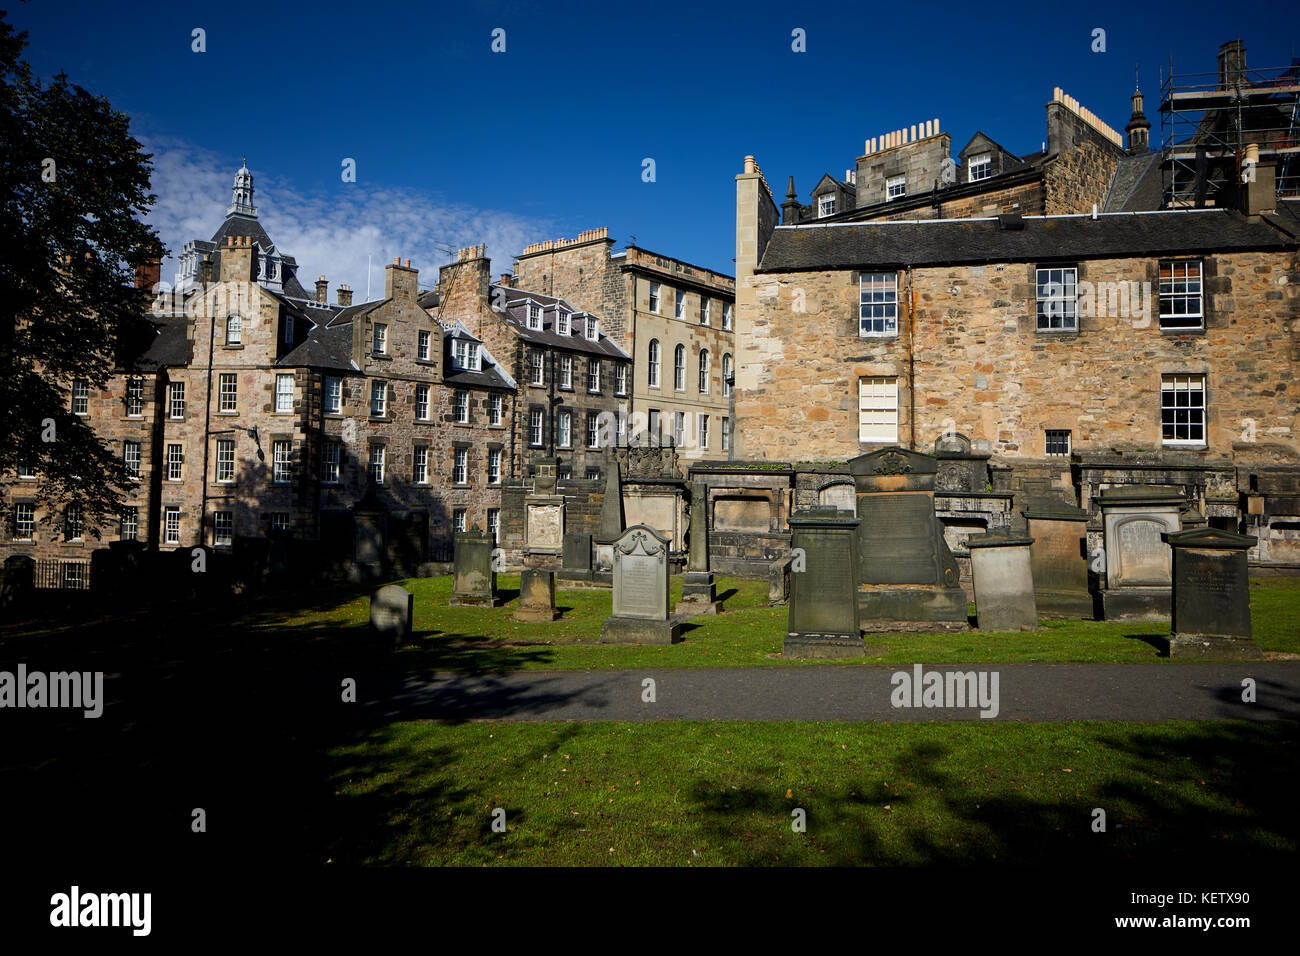 Historic Edinburgh, Scotland Grassmarket area inside Greyfriars Kirkyard graves lining the walls Stock Photo